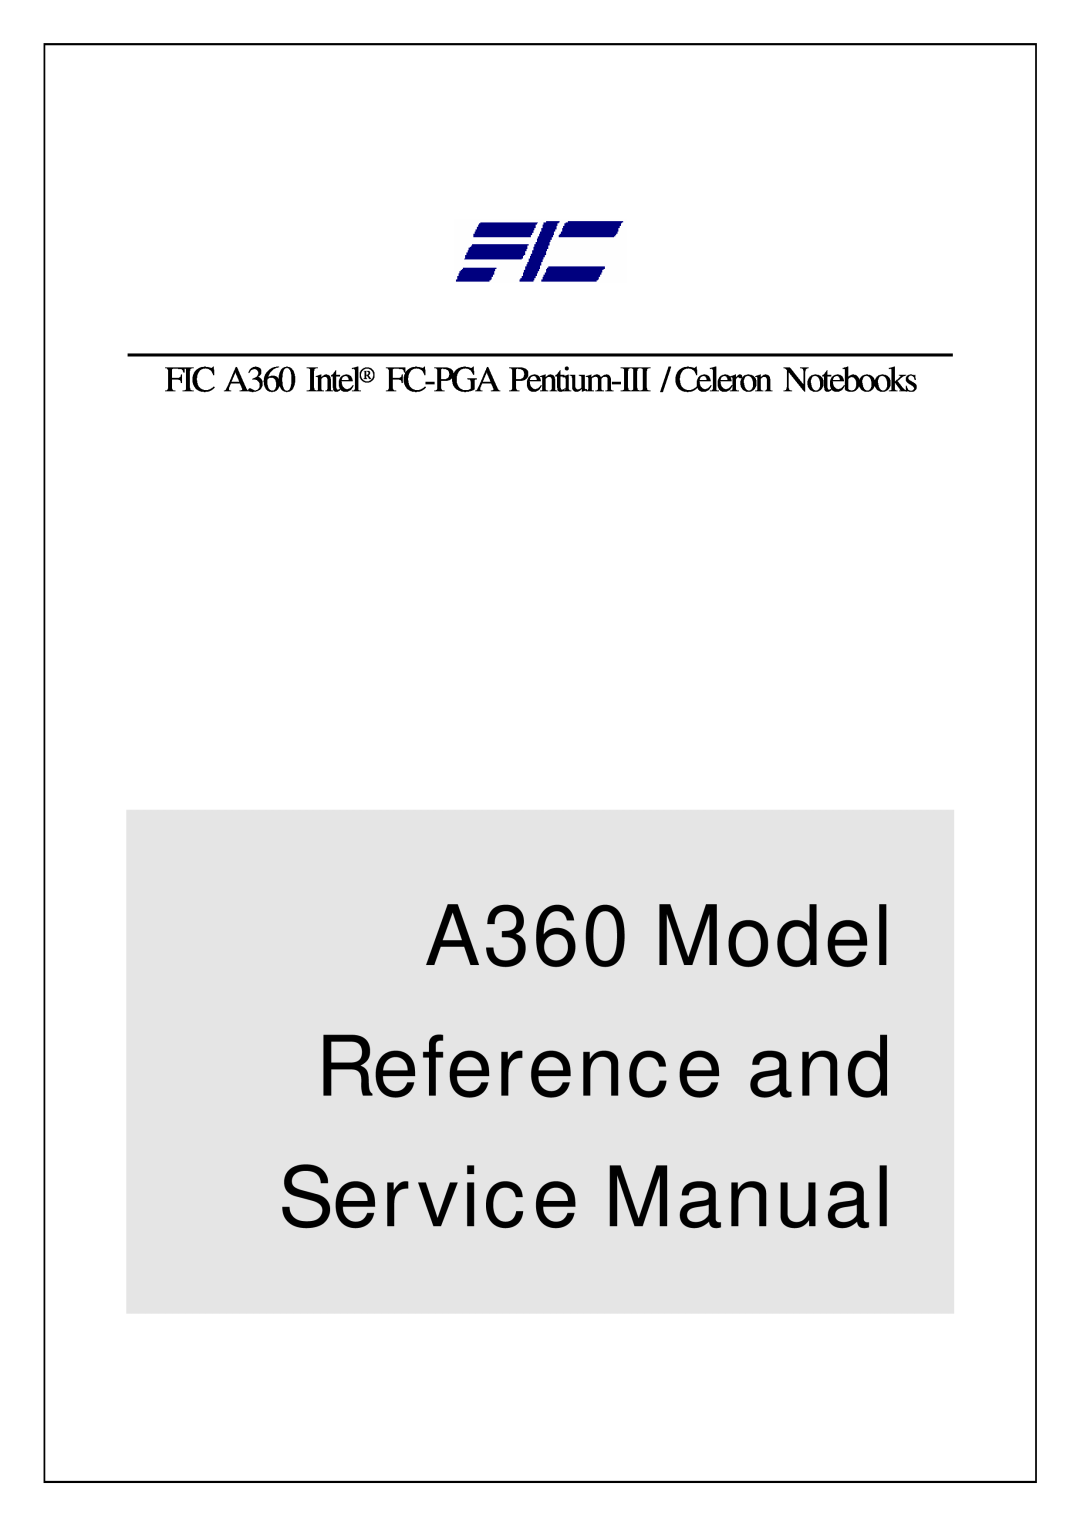 FIC service manual A360 Model Reference and Service Manual, FIC A360 Intel FC-PGA Pentium-III /Celeron Notebooks 